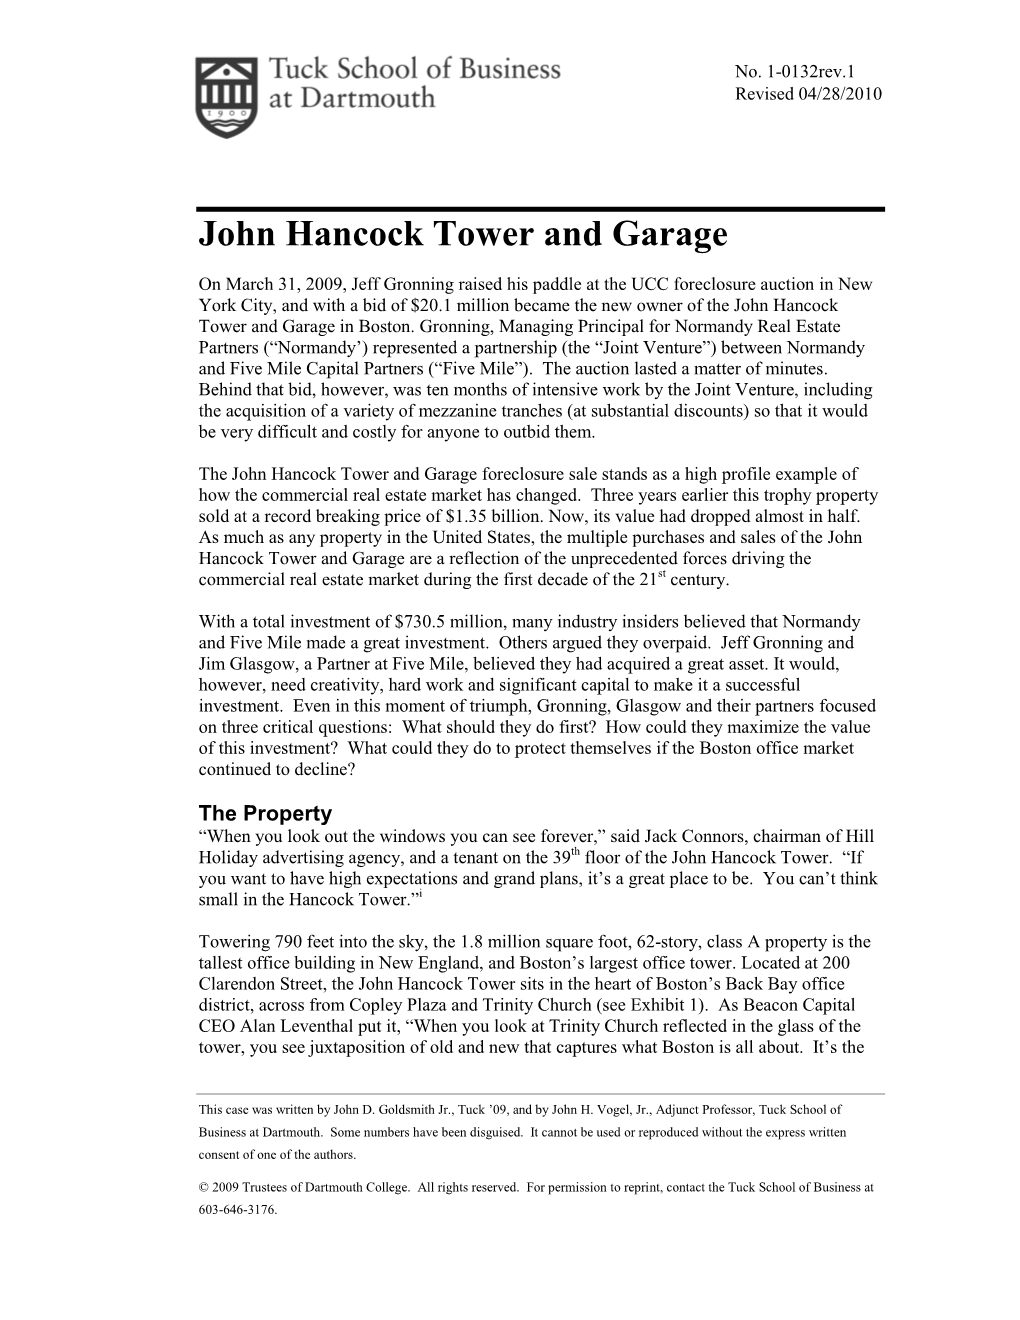 John Hancock Tower and Garage